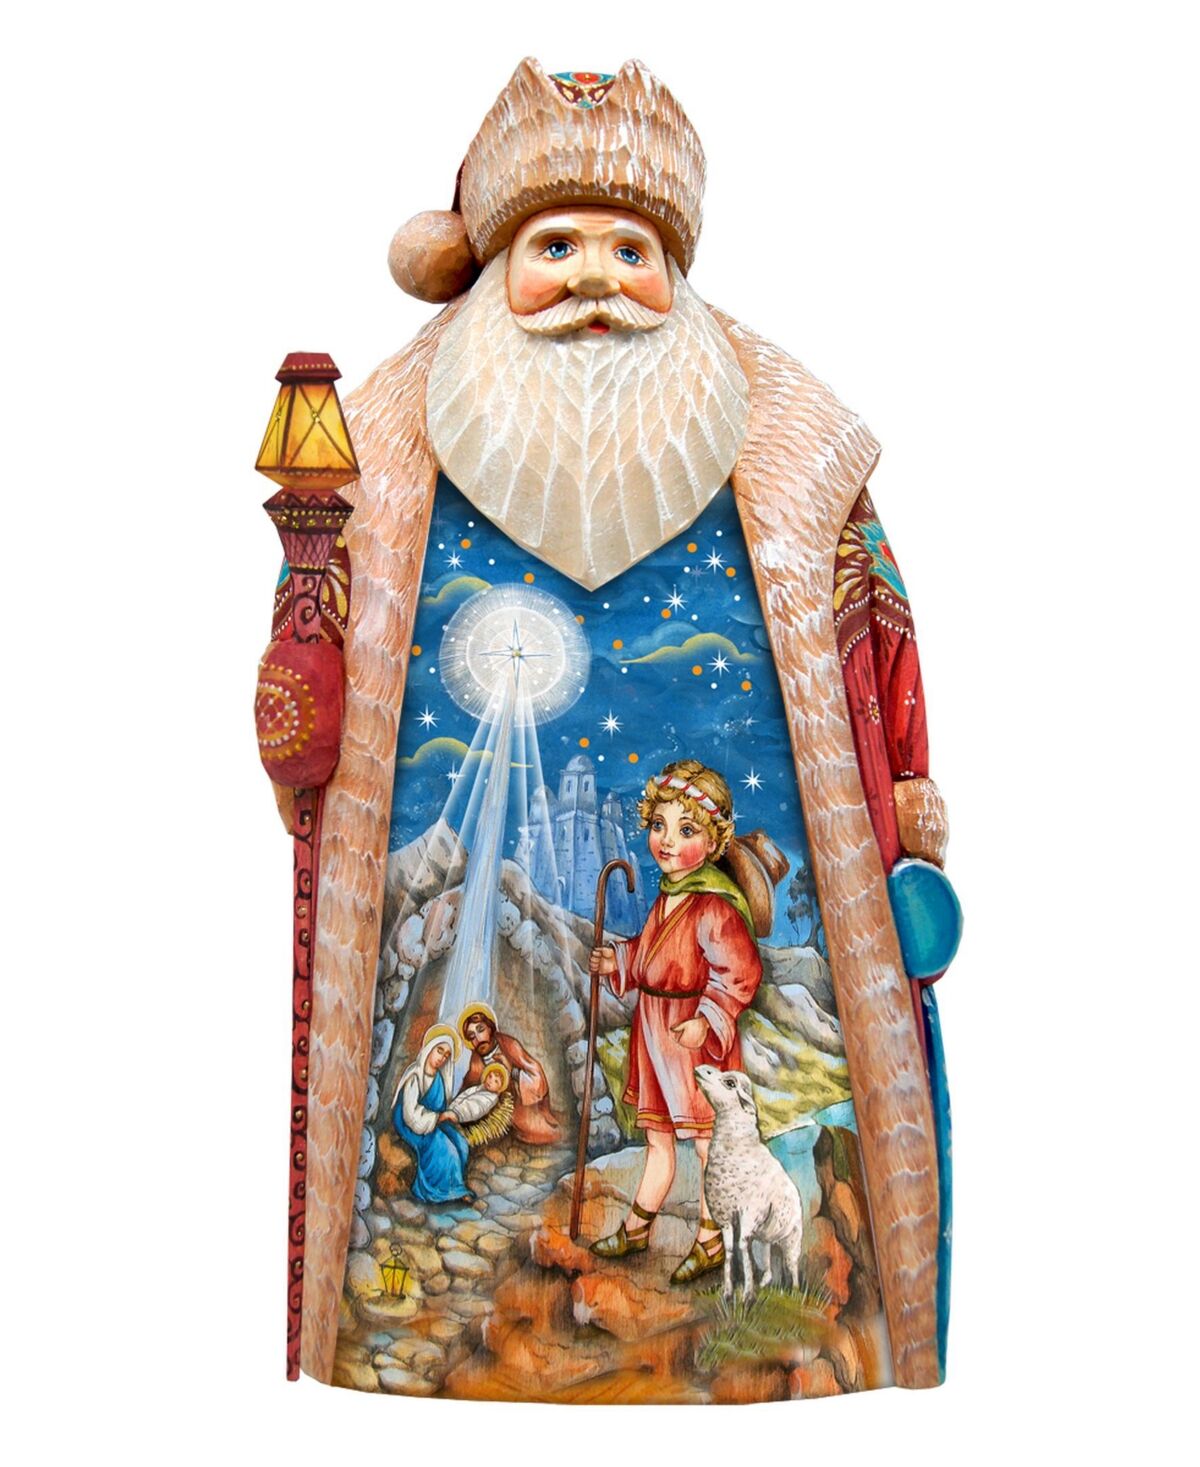 G.DeBrekht Woodcarved and Hand Painted Star of Hope Santa Figurine - Multi